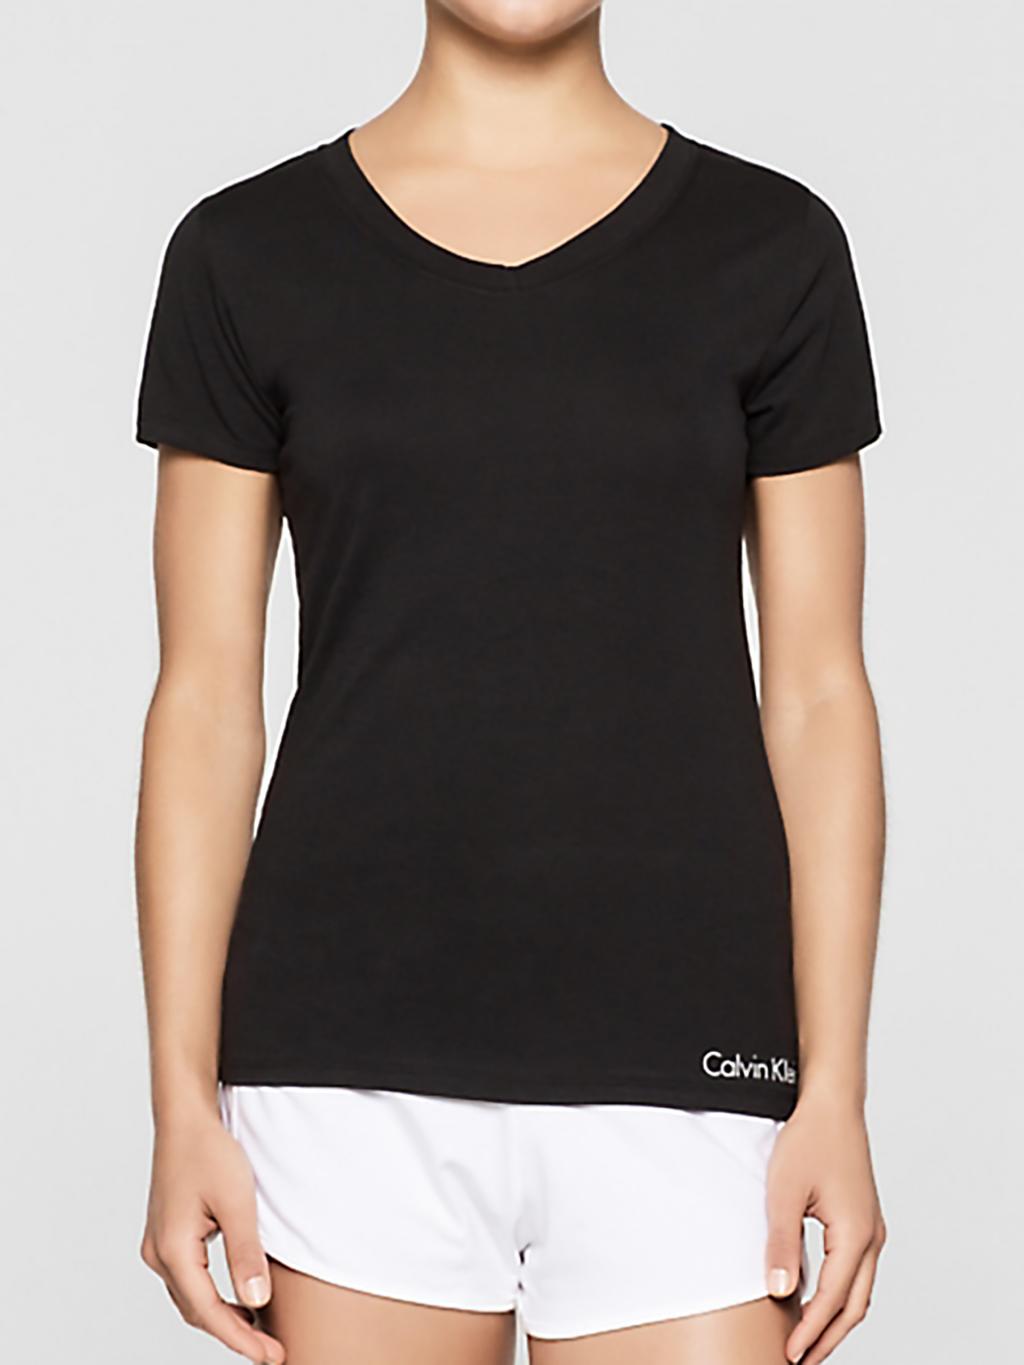 QS5415 - dámské triko Calvin Klein